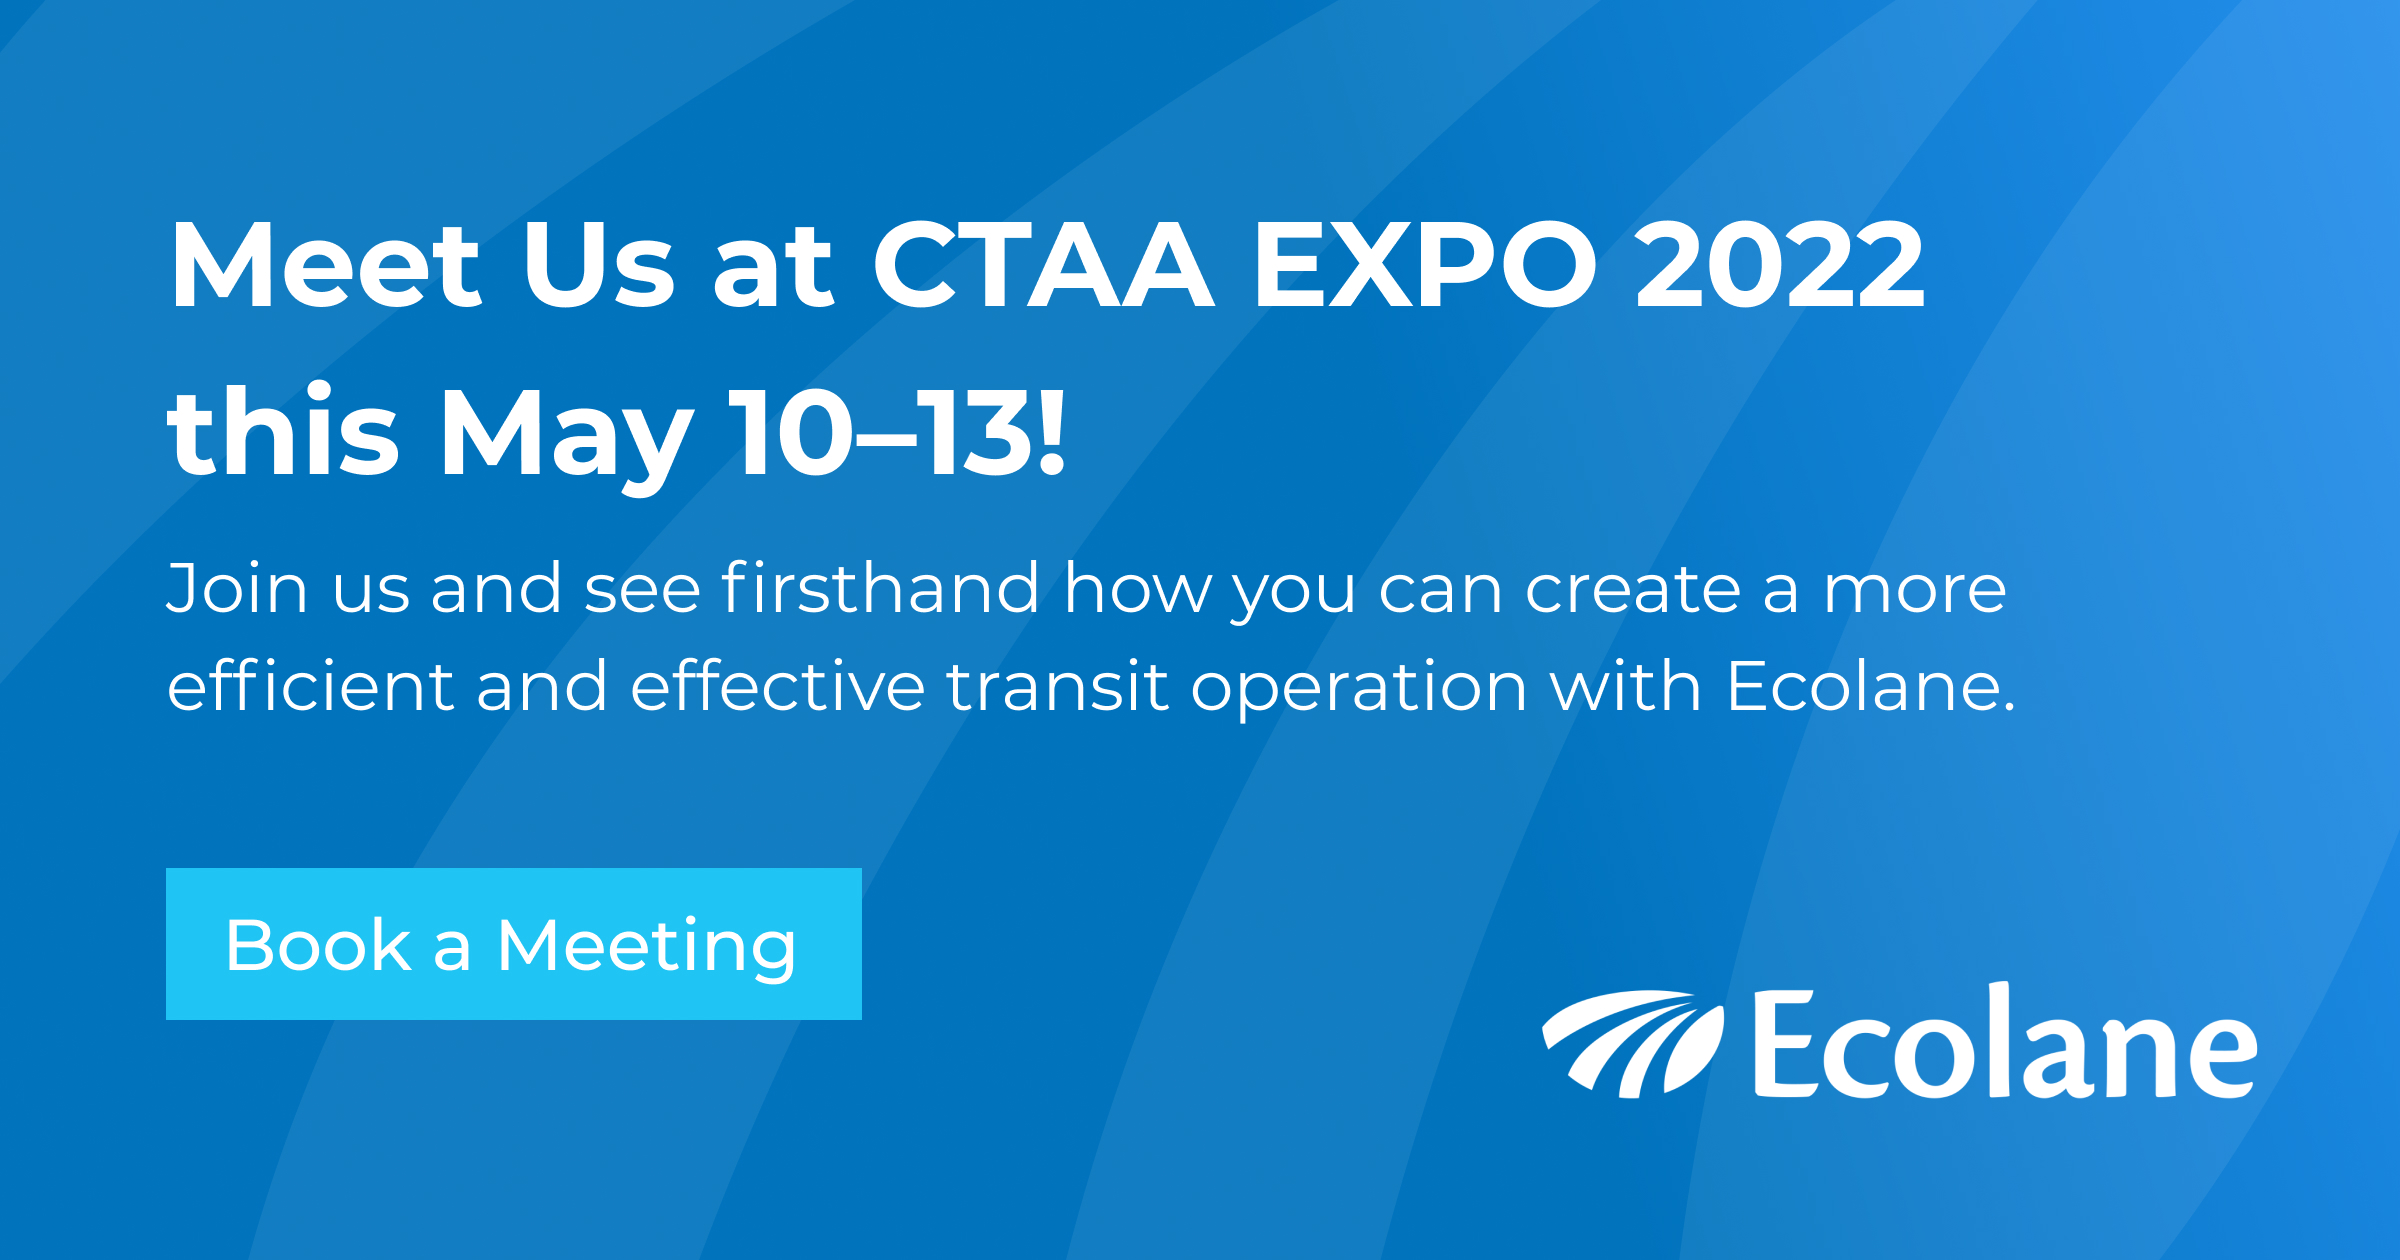 MEET US AT CTAA EXPO 2022